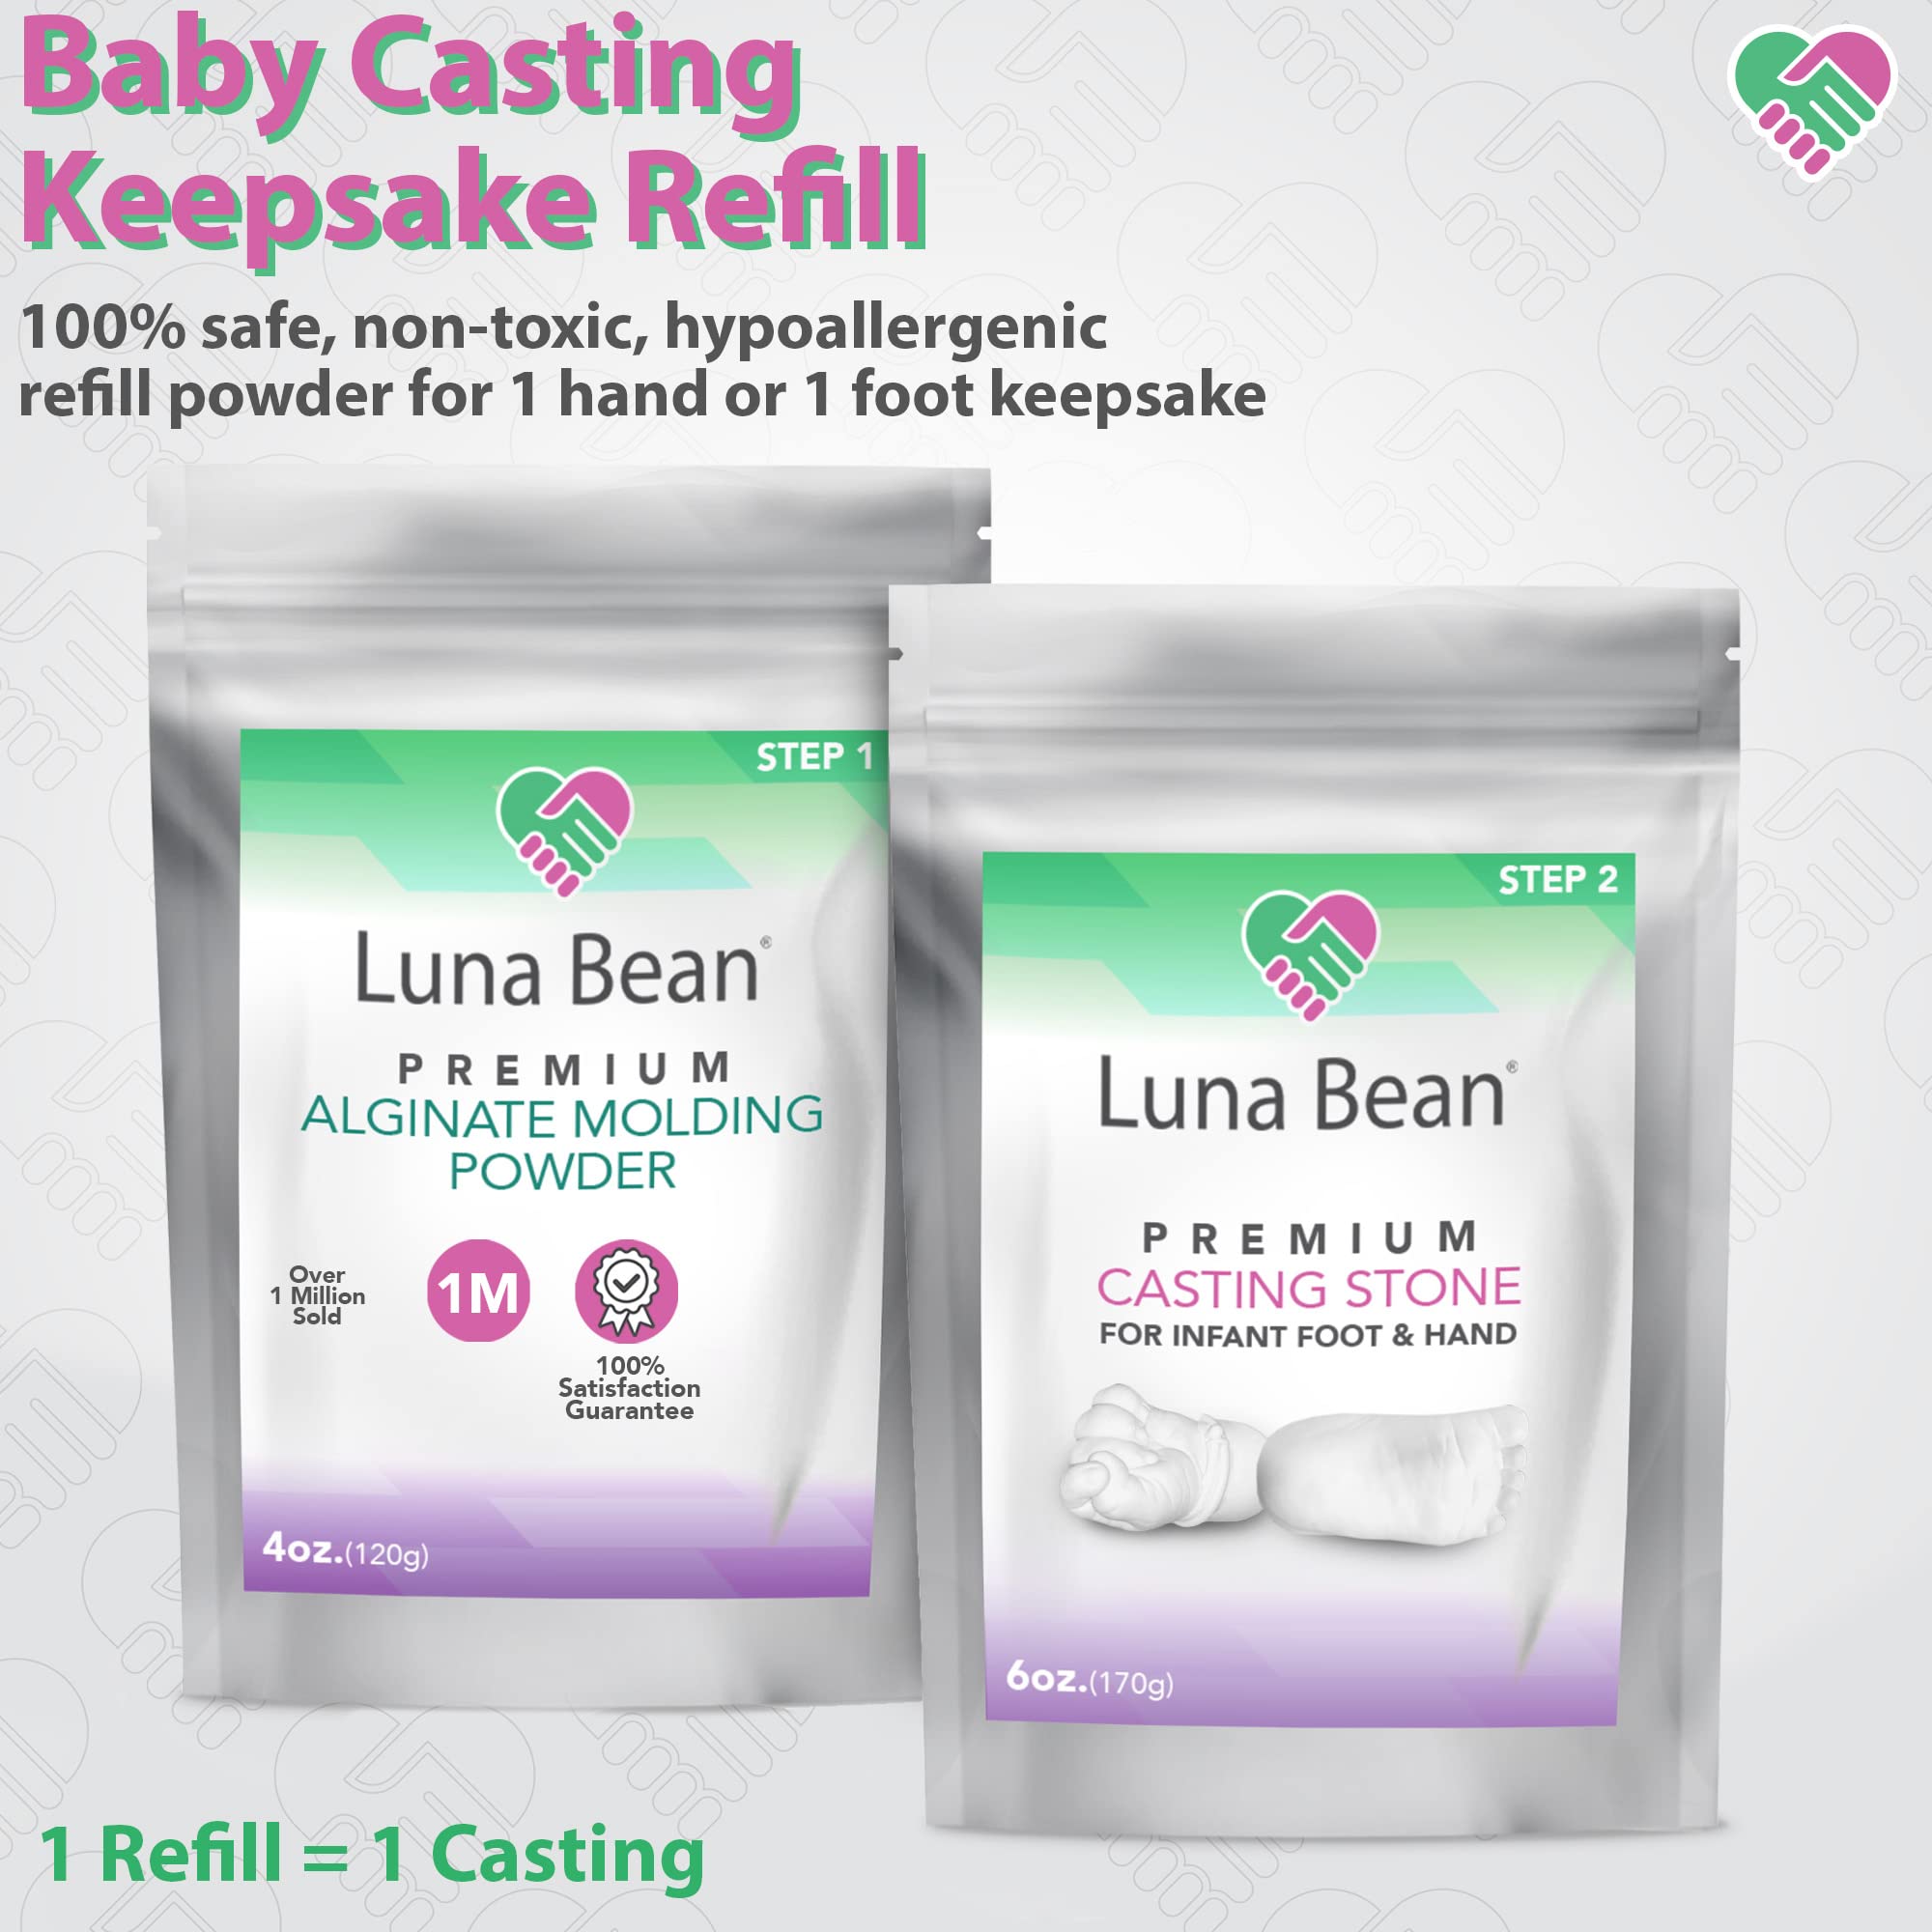 Luna Bean Baby Hand and Footprint Kit - Perfect Baby Keepsake